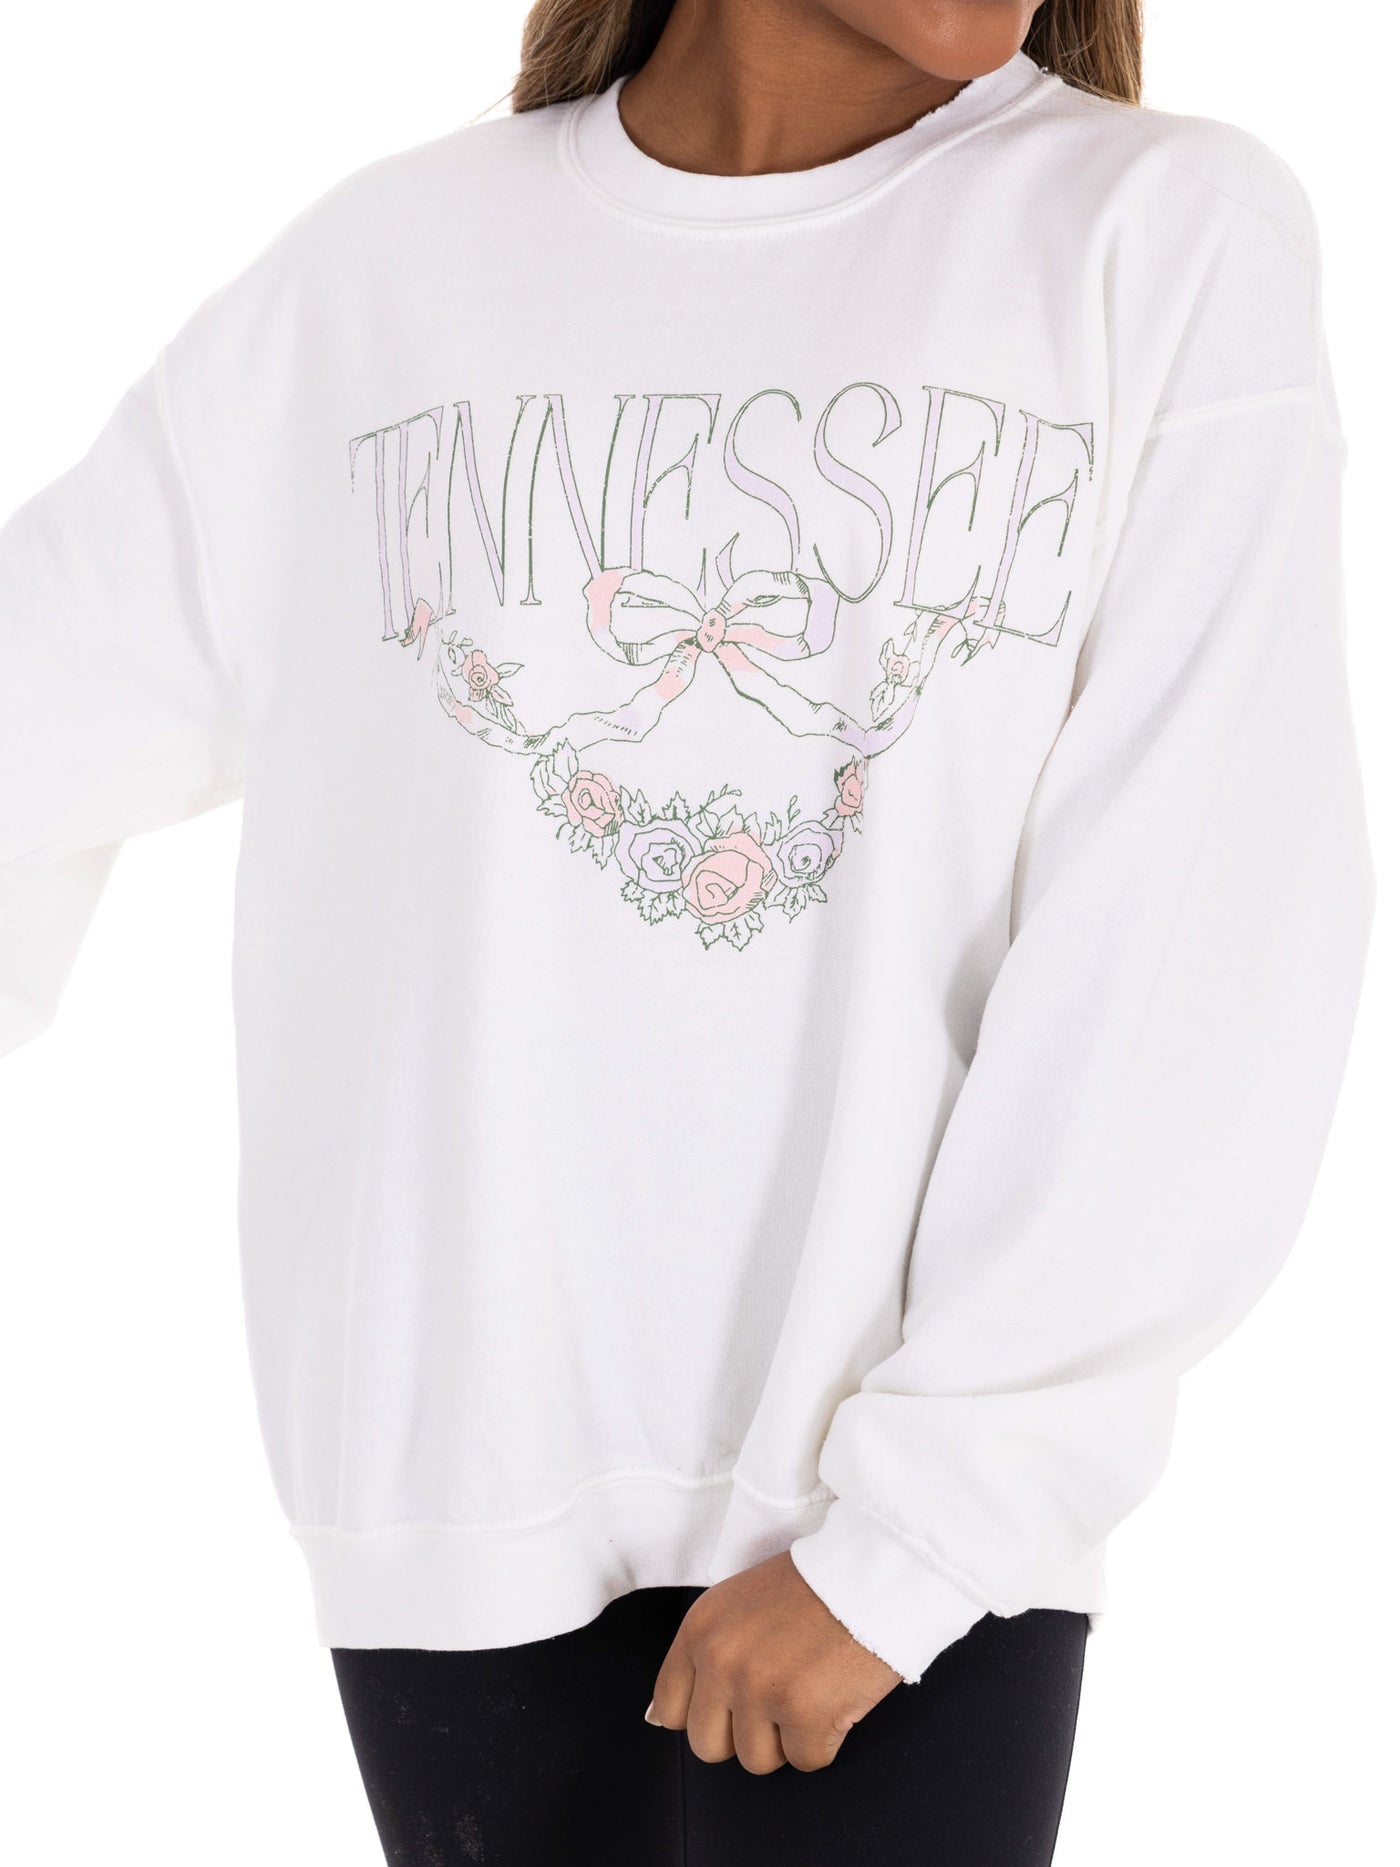 Tennessee Swag Thrifted Sweatshirt